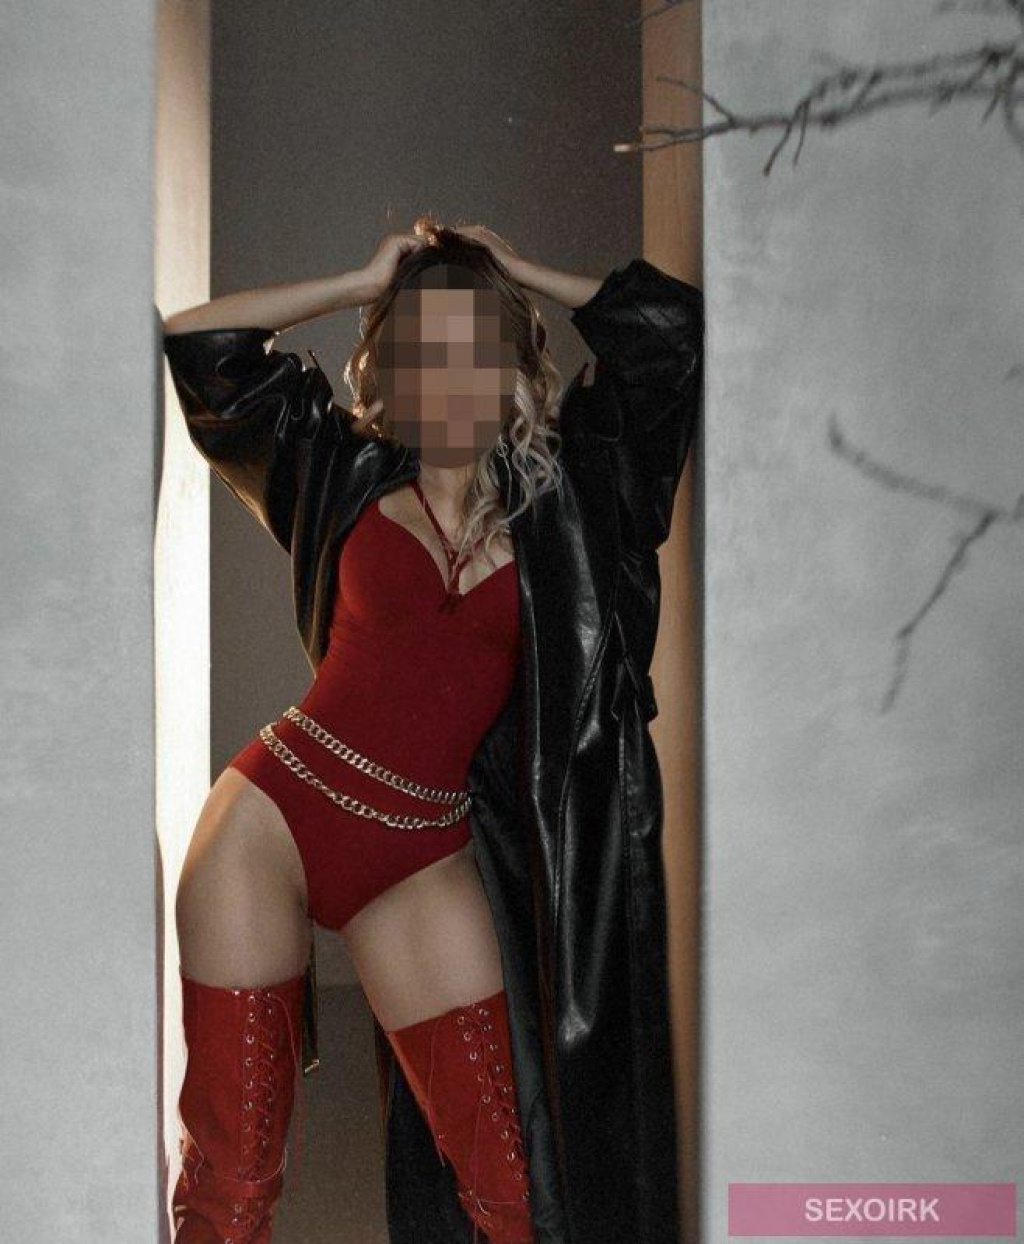 Дианочка: проститутки индивидуалки в Иркутске